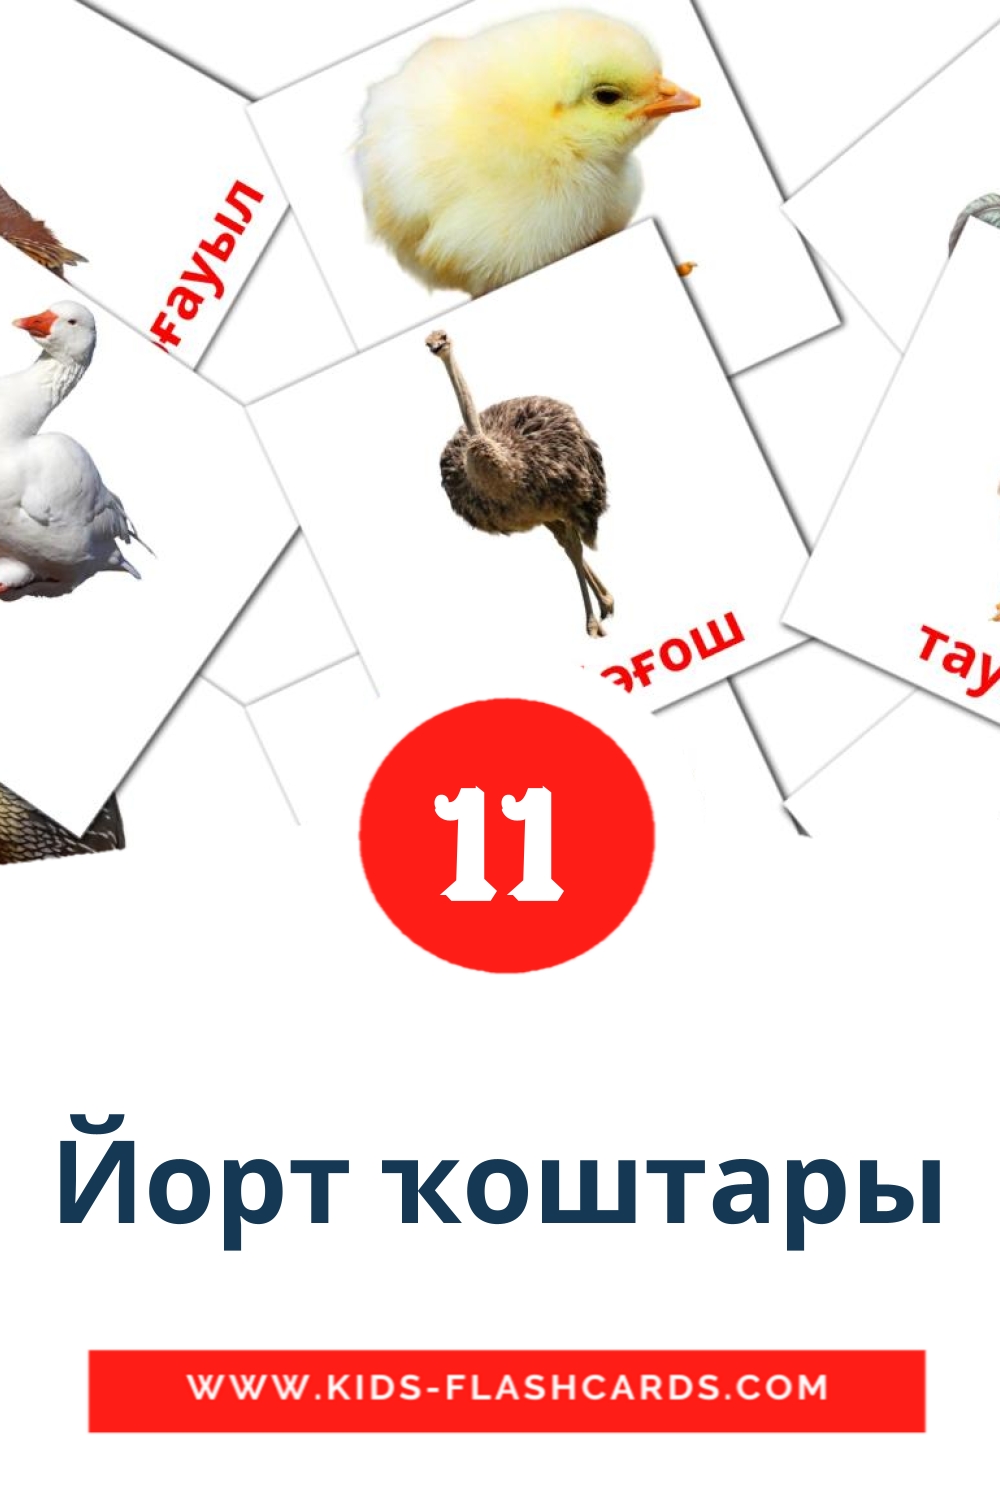 11 Йорт ҡоштары Picture Cards for Kindergarden in bashkir